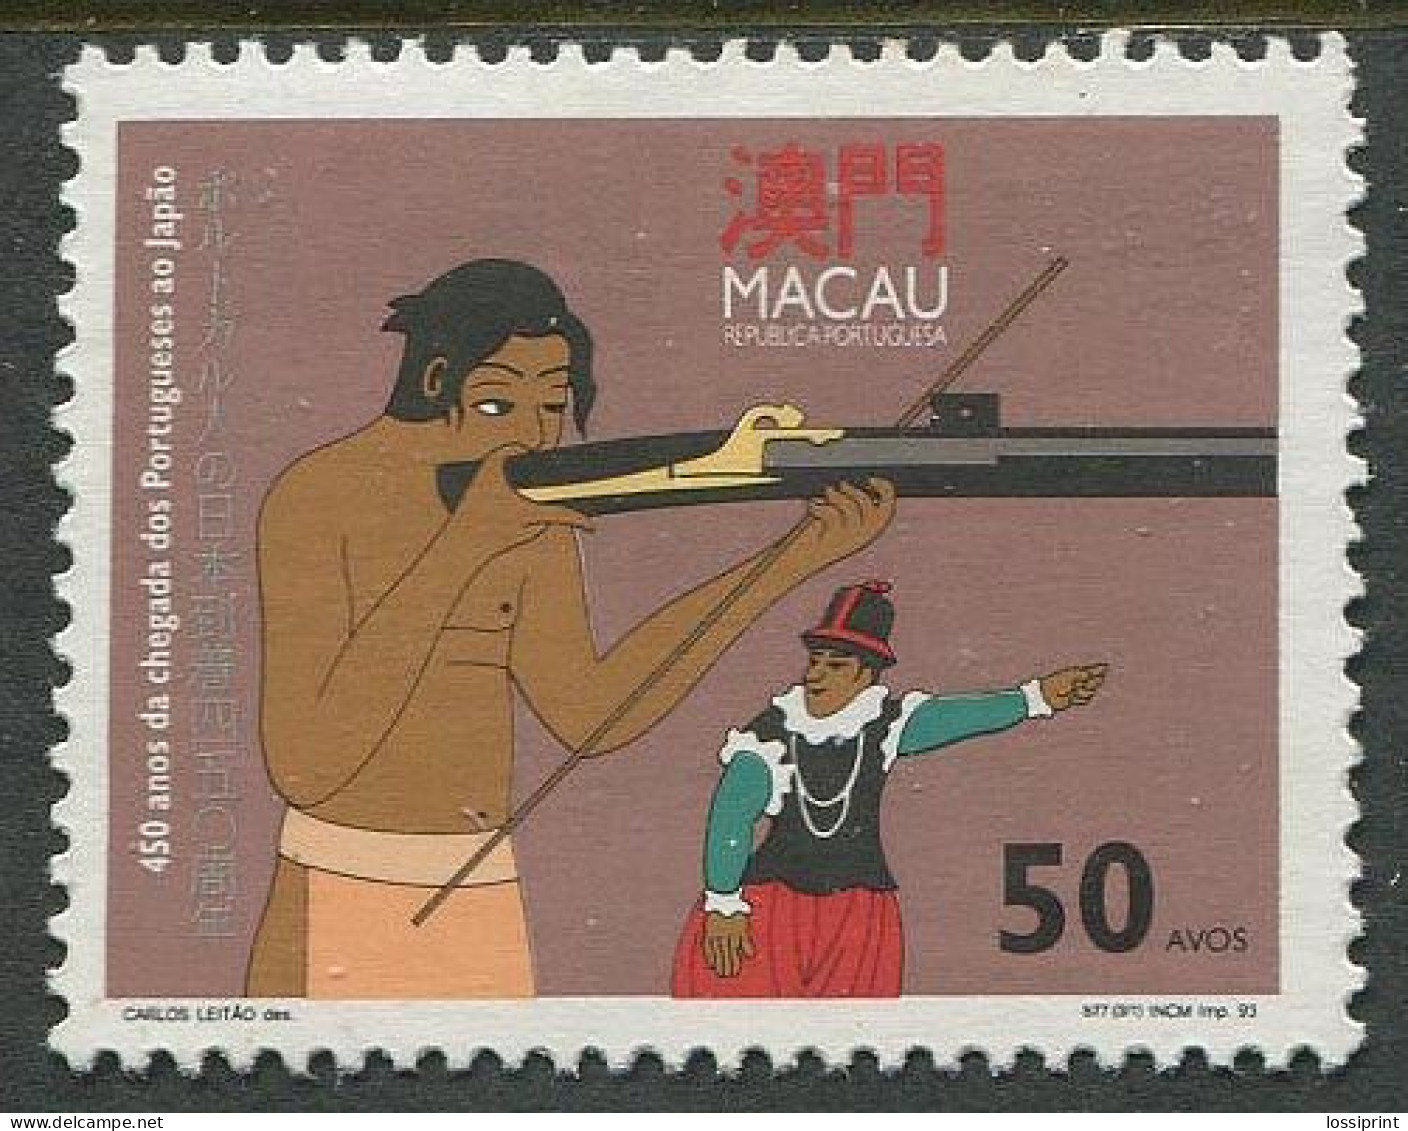 Macau:Unused Stamp Shooting, 1993, MNH - Tir (Armes)